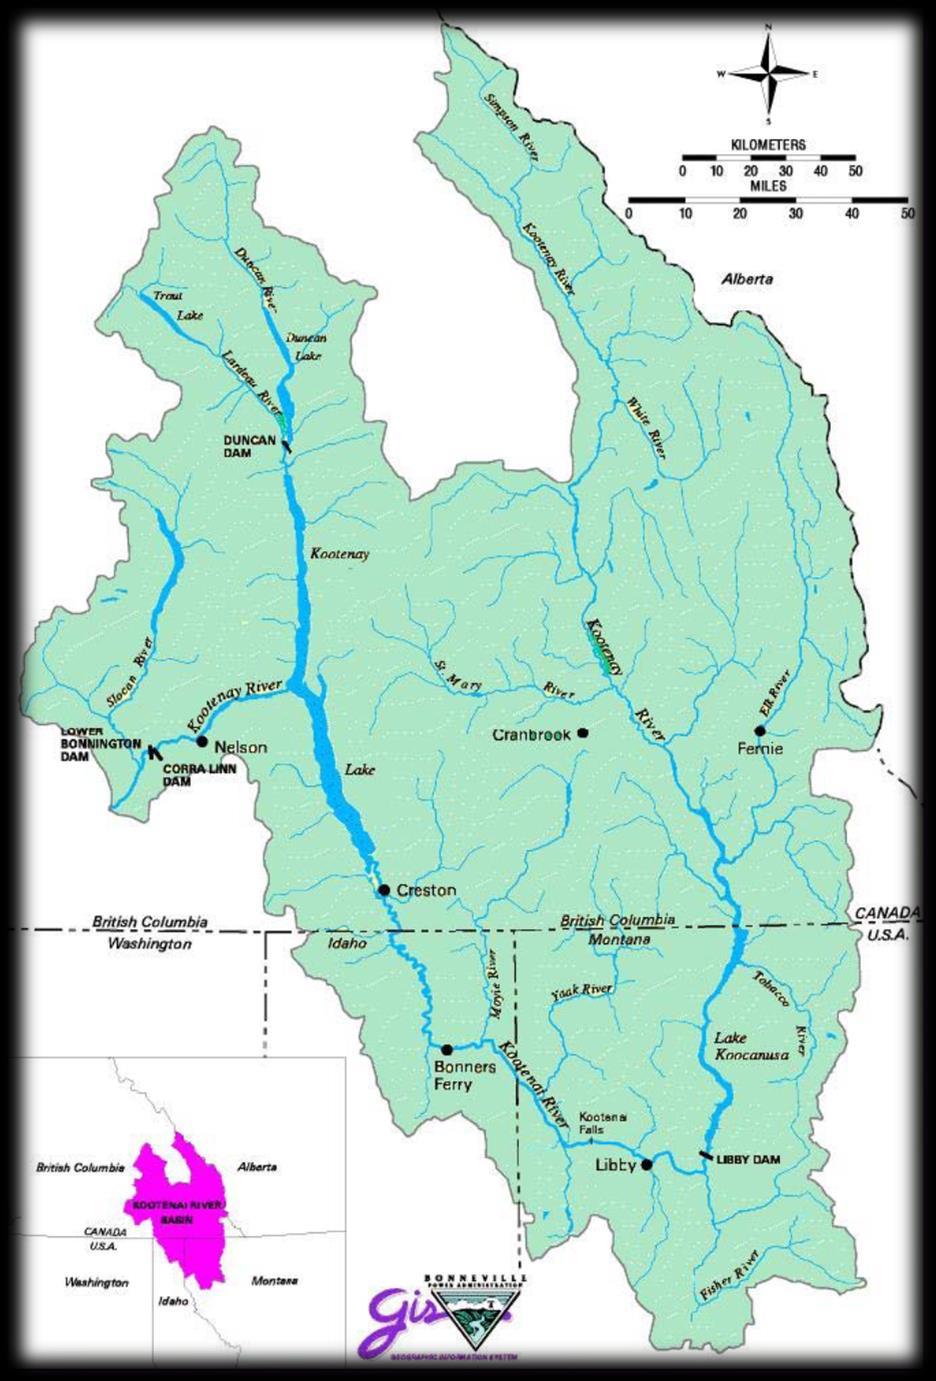 Kootenai River Subbasin Ktunaxa Nation Territory 9 million acres (19,420 square miles) 485